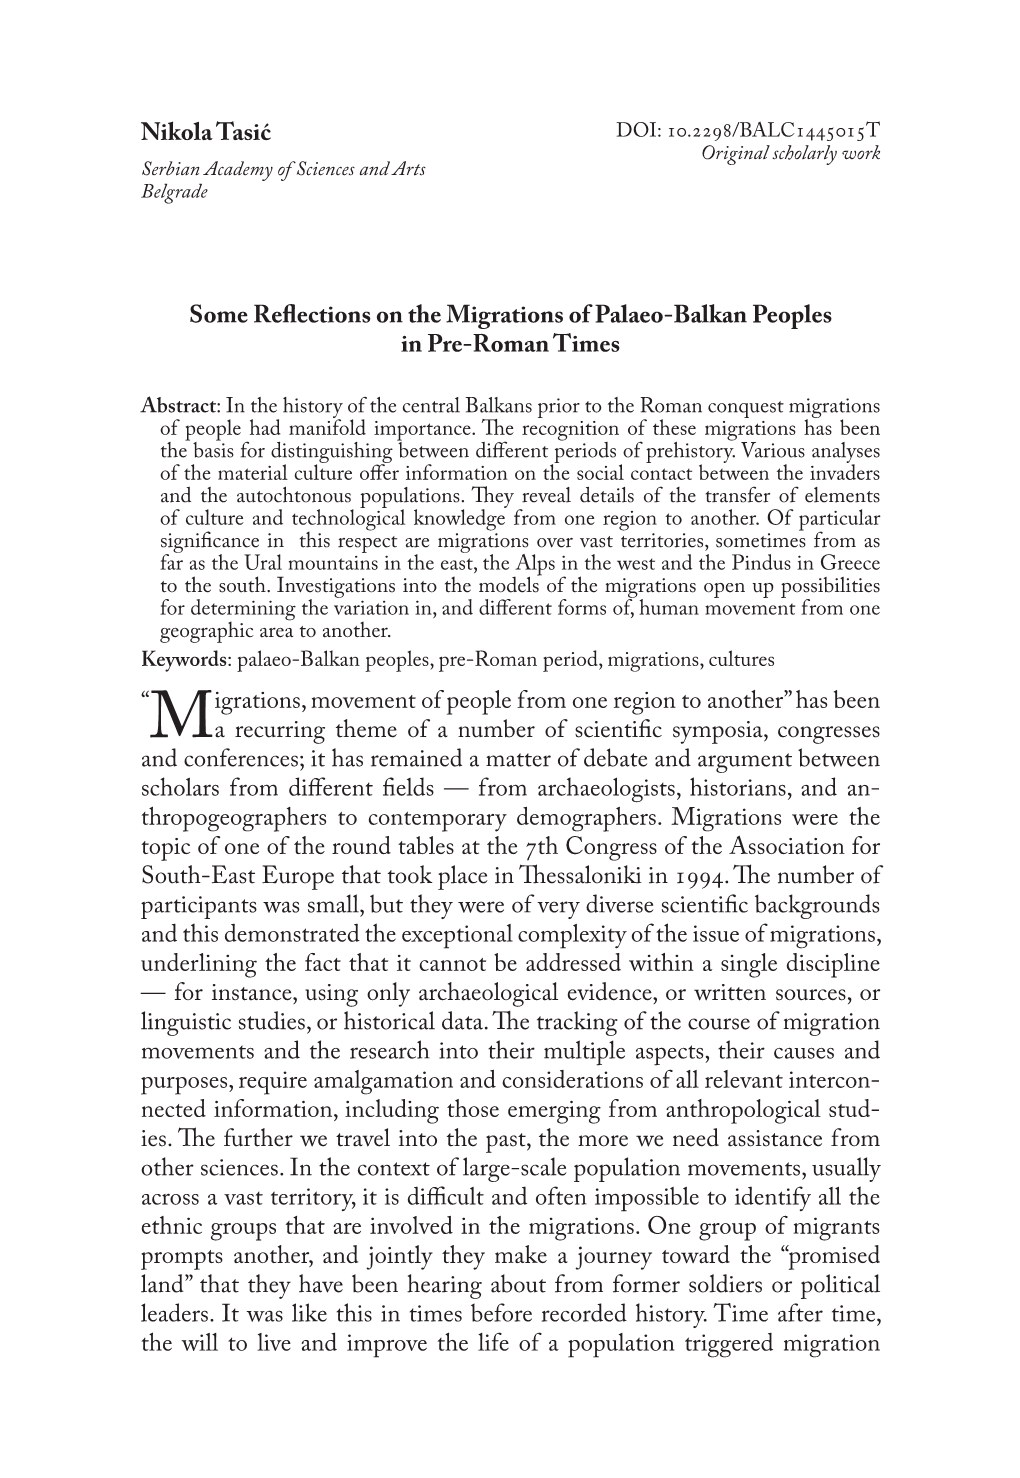 Nikola Tasić Some Reflections on the Migrations of Palaeo-Balkan